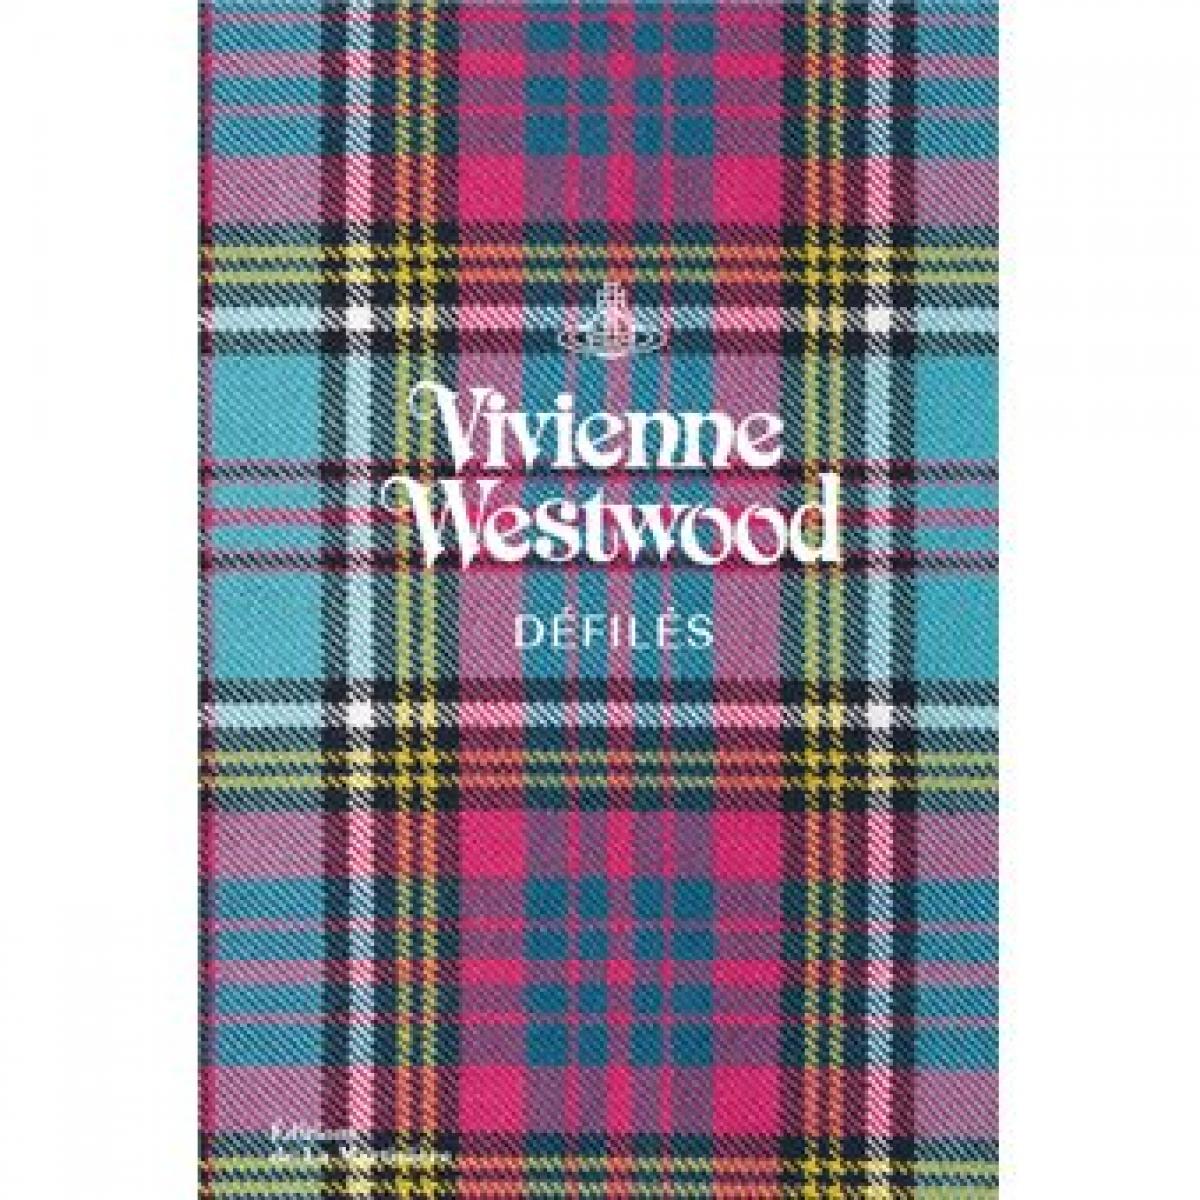 « Vivienne Westwood » de Alexander Fury